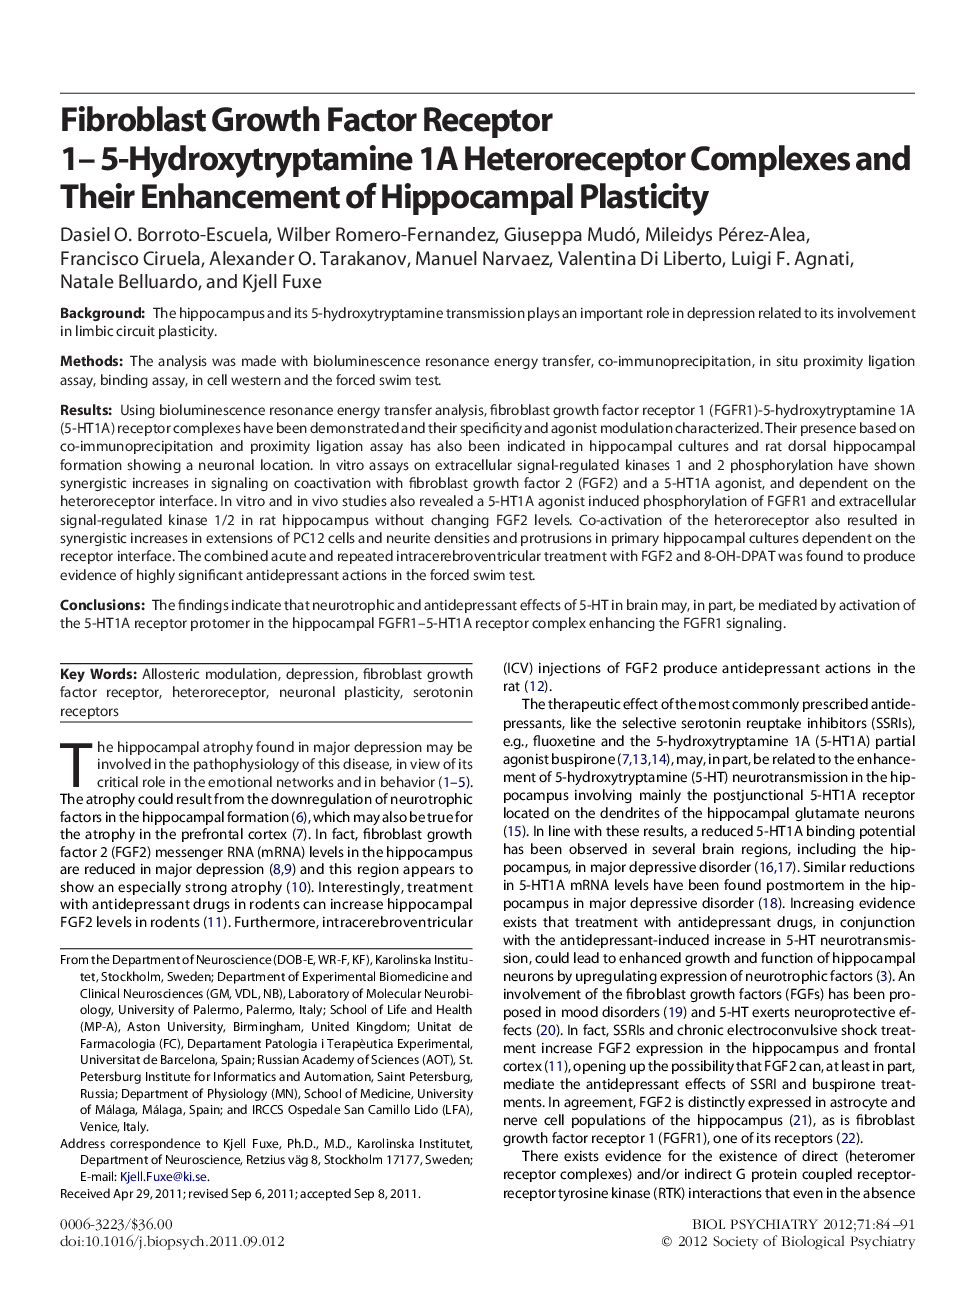 Fibroblast Growth Factor Receptor 1- 5-Hydroxytryptamine 1A Heteroreceptor Complexes and Their Enhancement of Hippocampal Plasticity